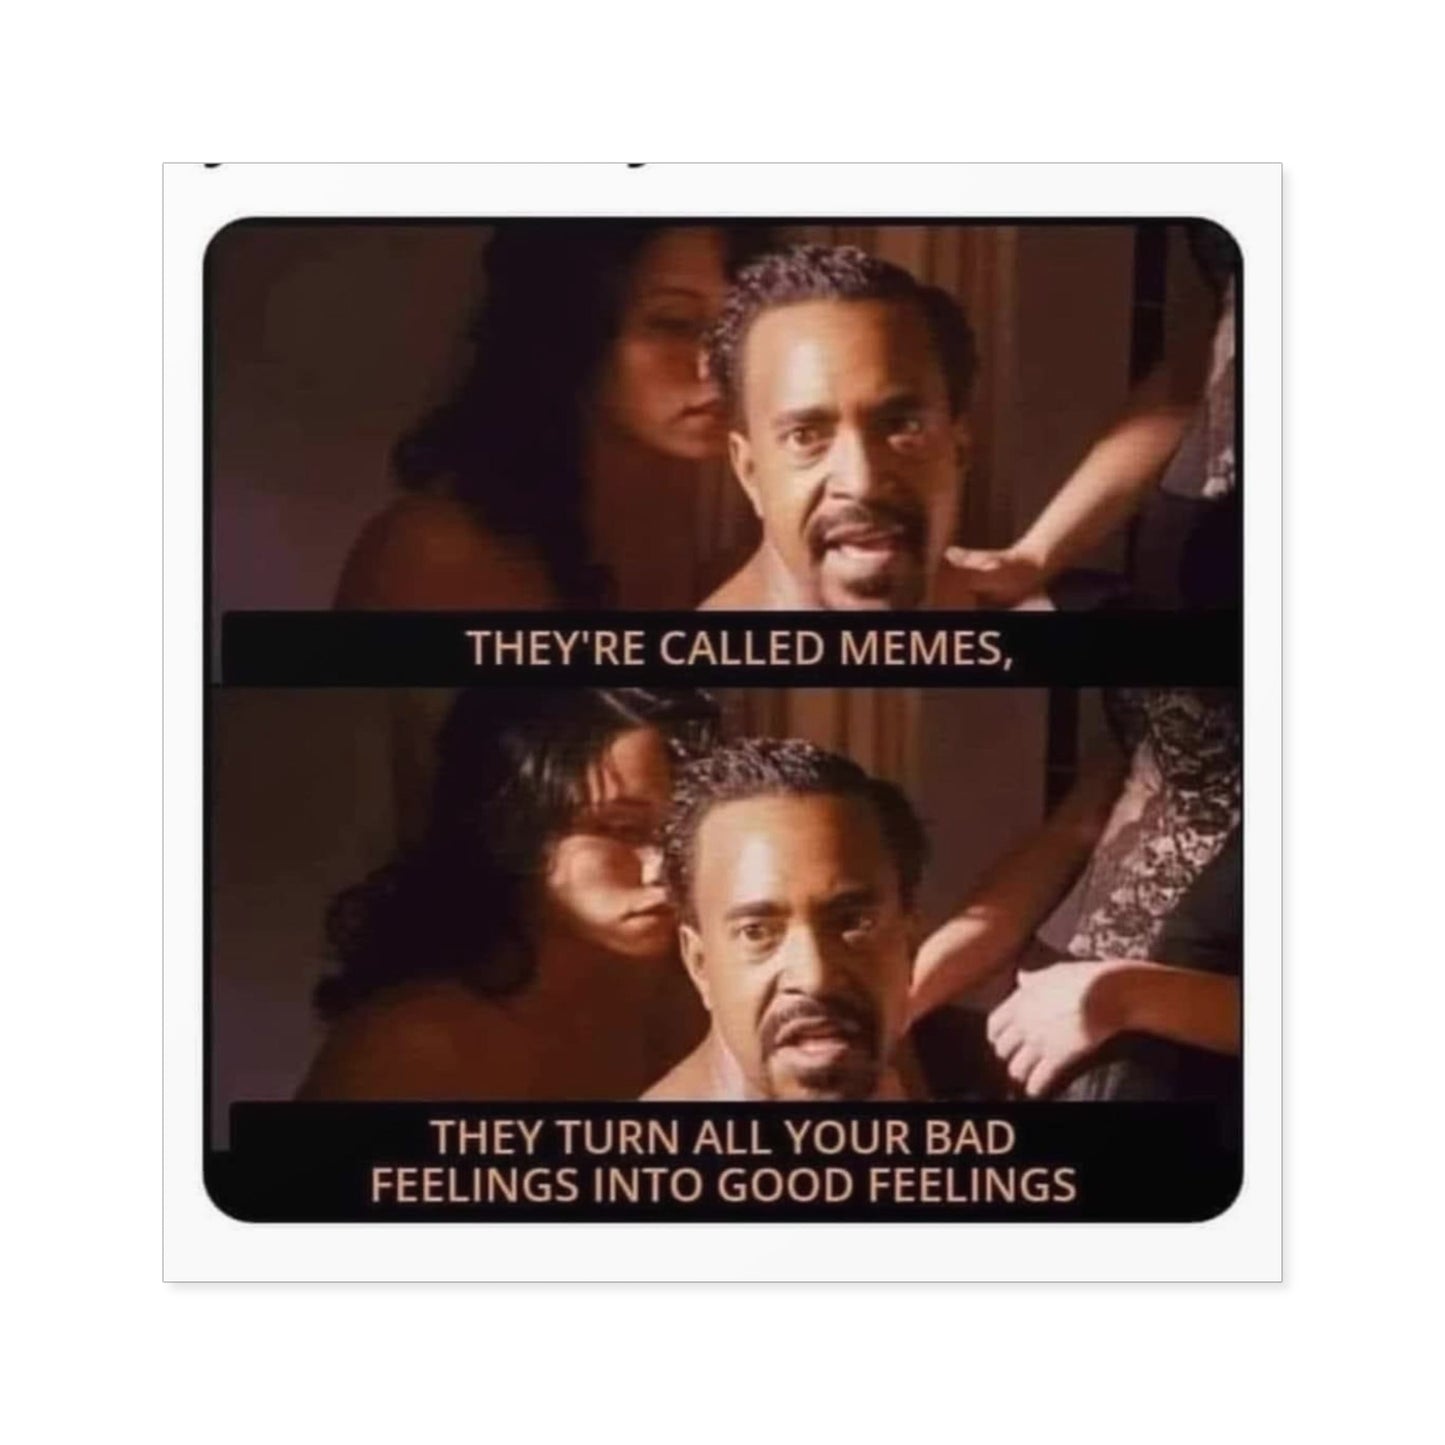 MemePrints